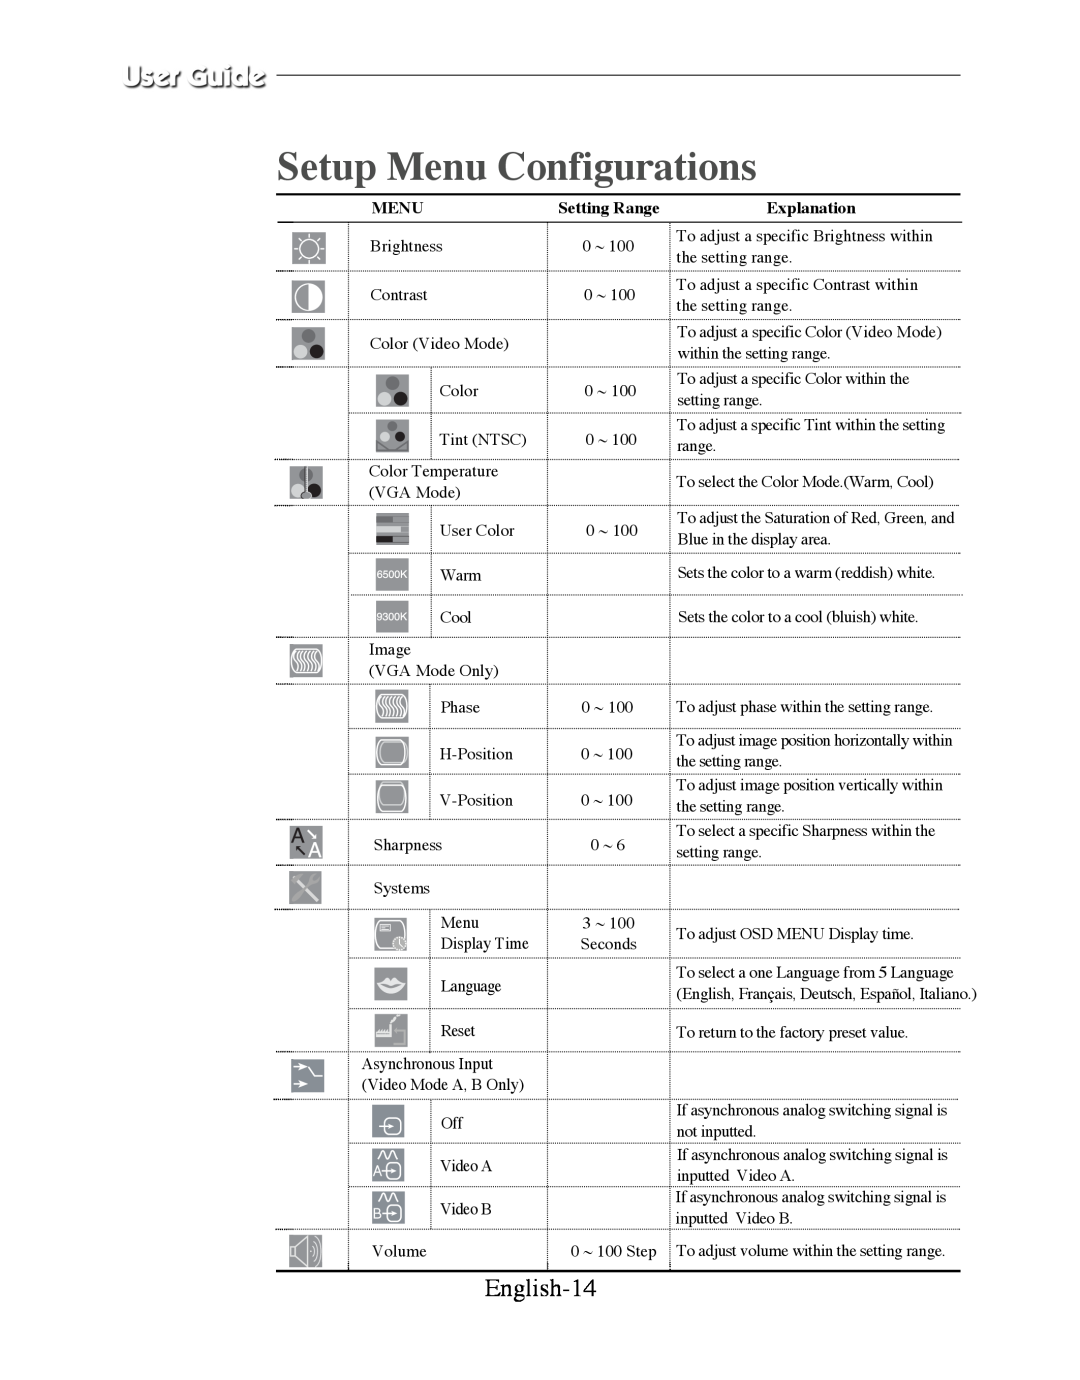 Samsung SMT-170P manual Setup Menu Configurations, English-14, Setting Range 